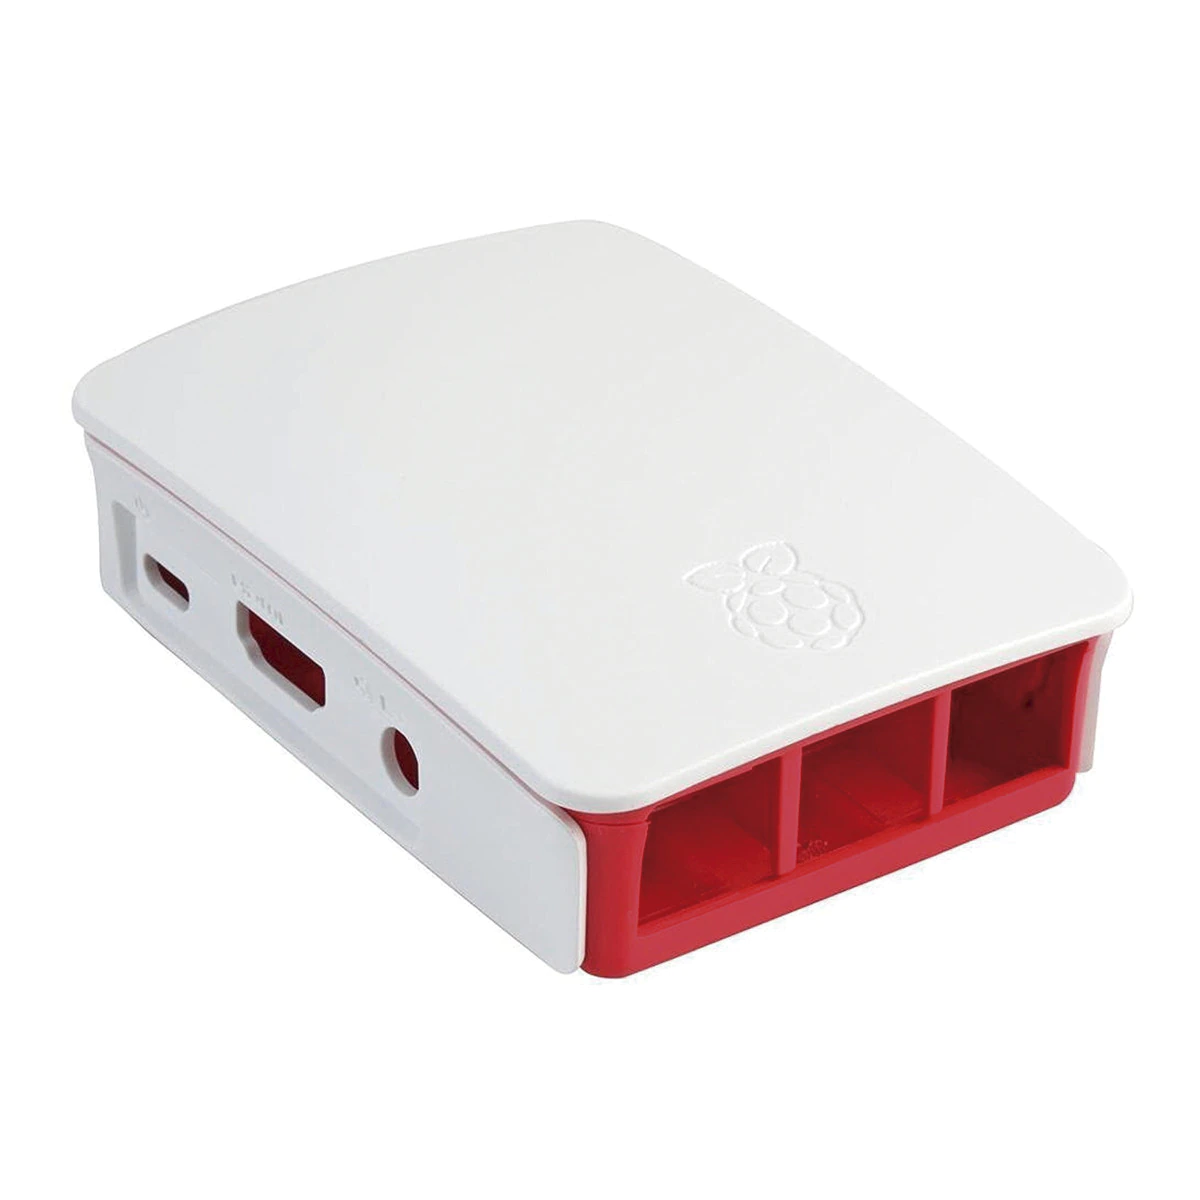 Caja para Raspberry Pi 3 Oficial, Rojo y blanco